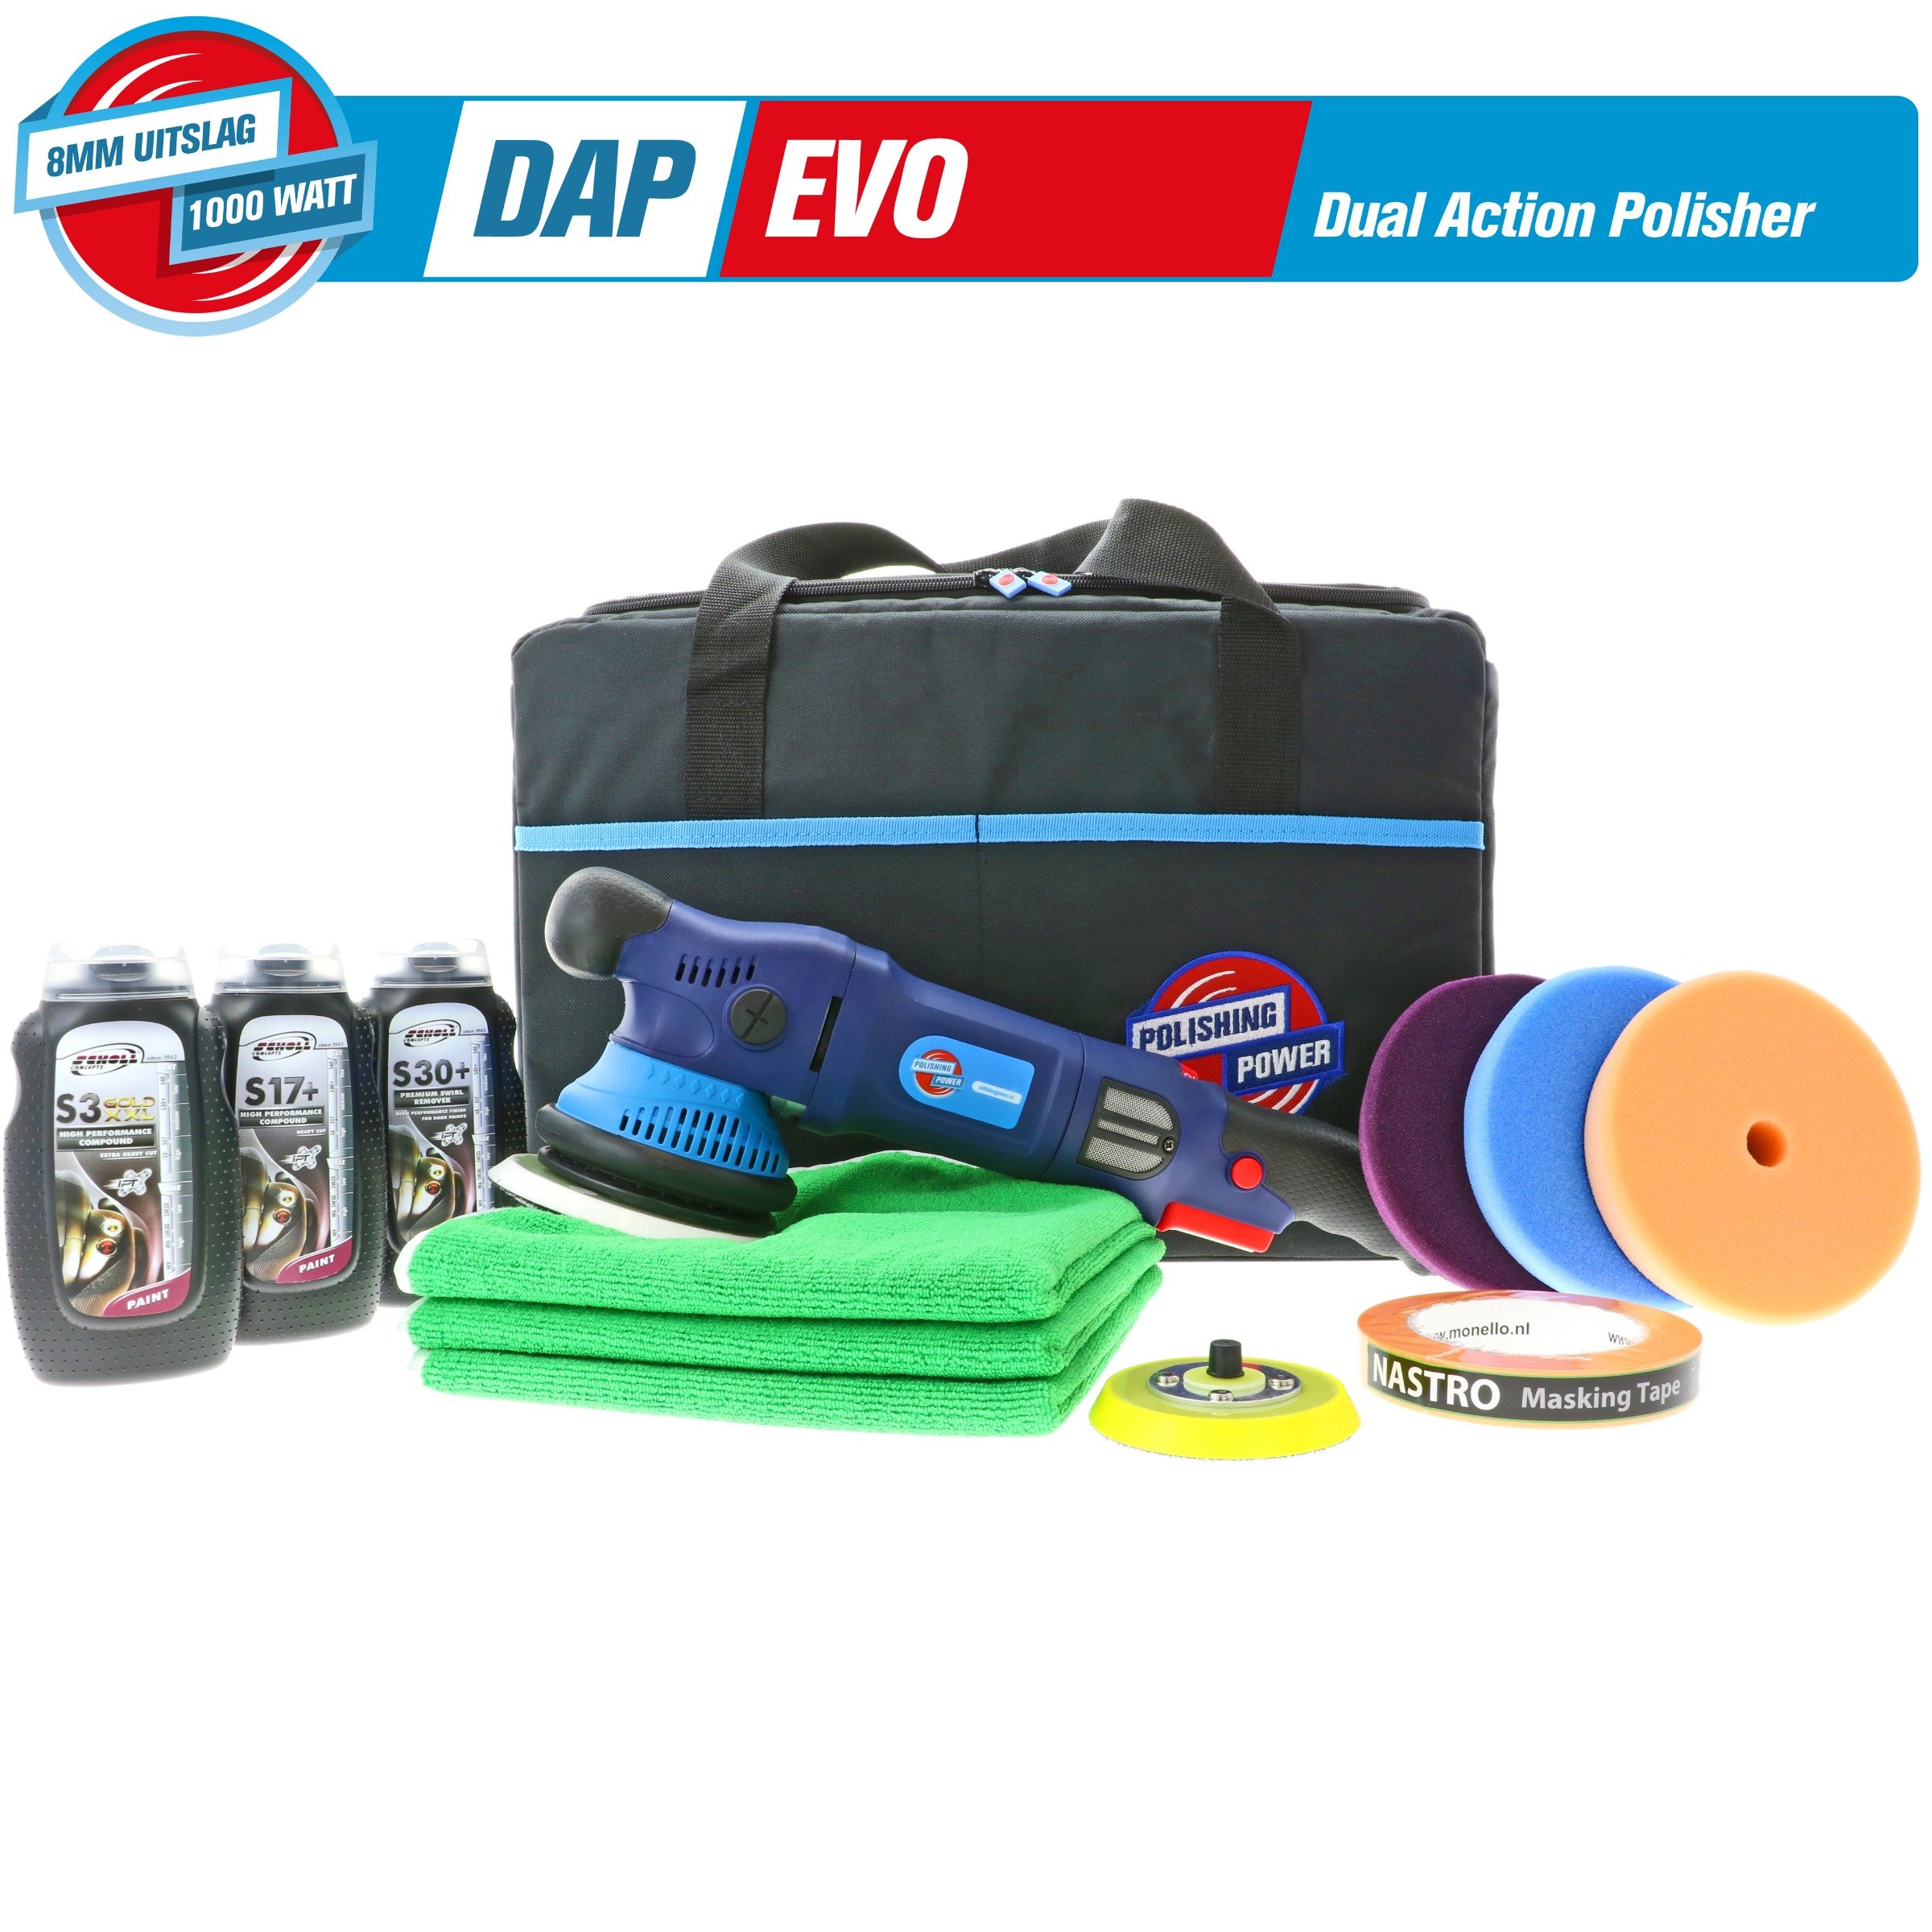 DAP EVO Scholl Concepts Evolution Pack